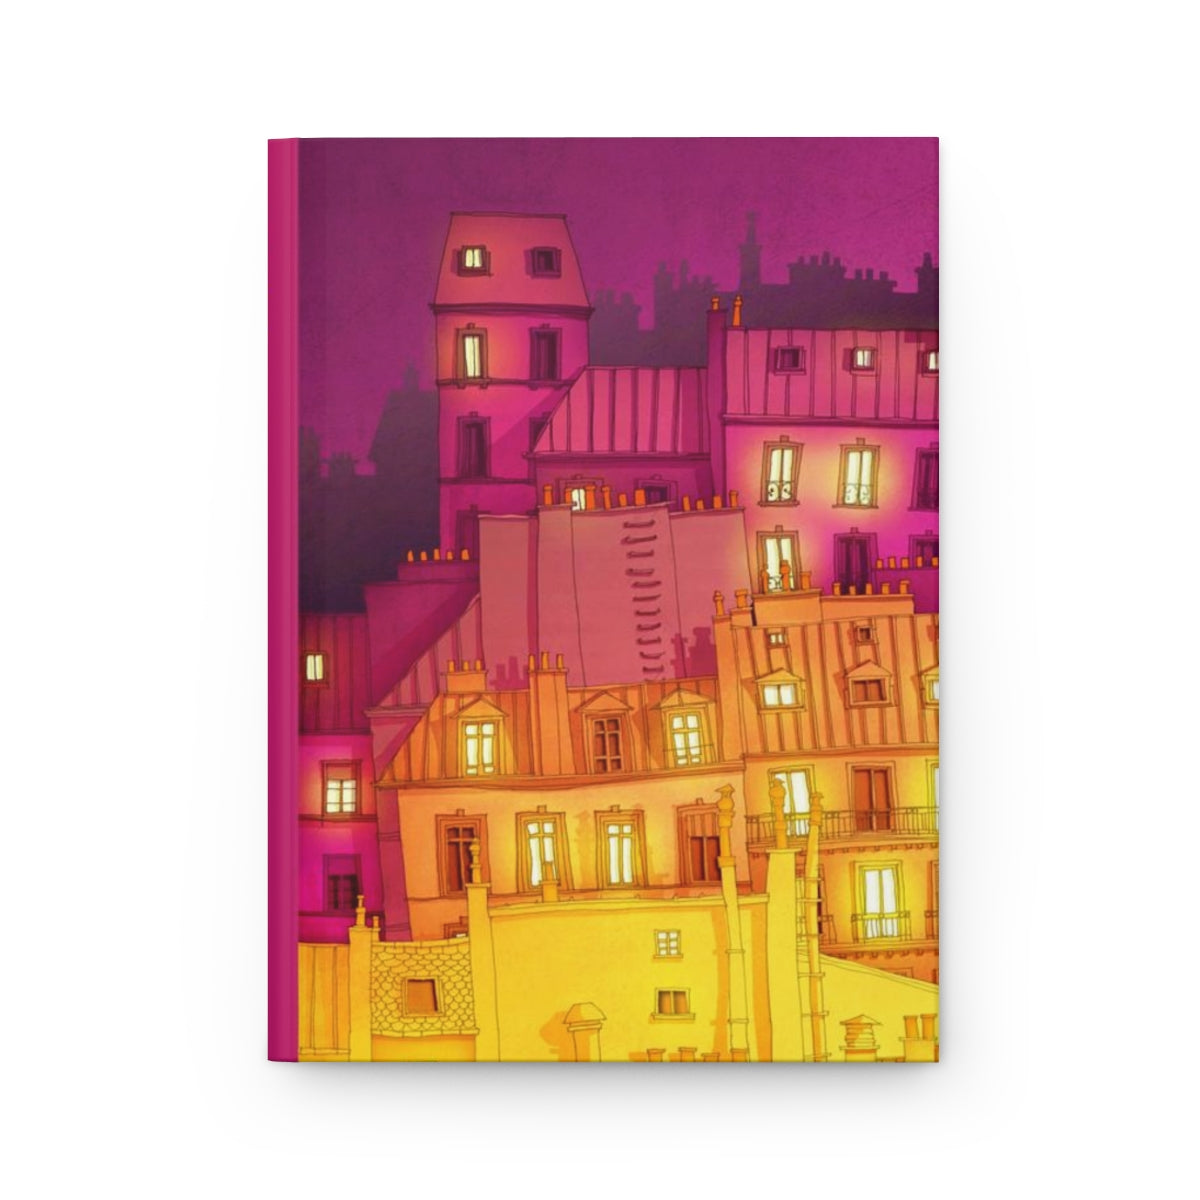 Montmartre at night - Paris Art Journal No.13